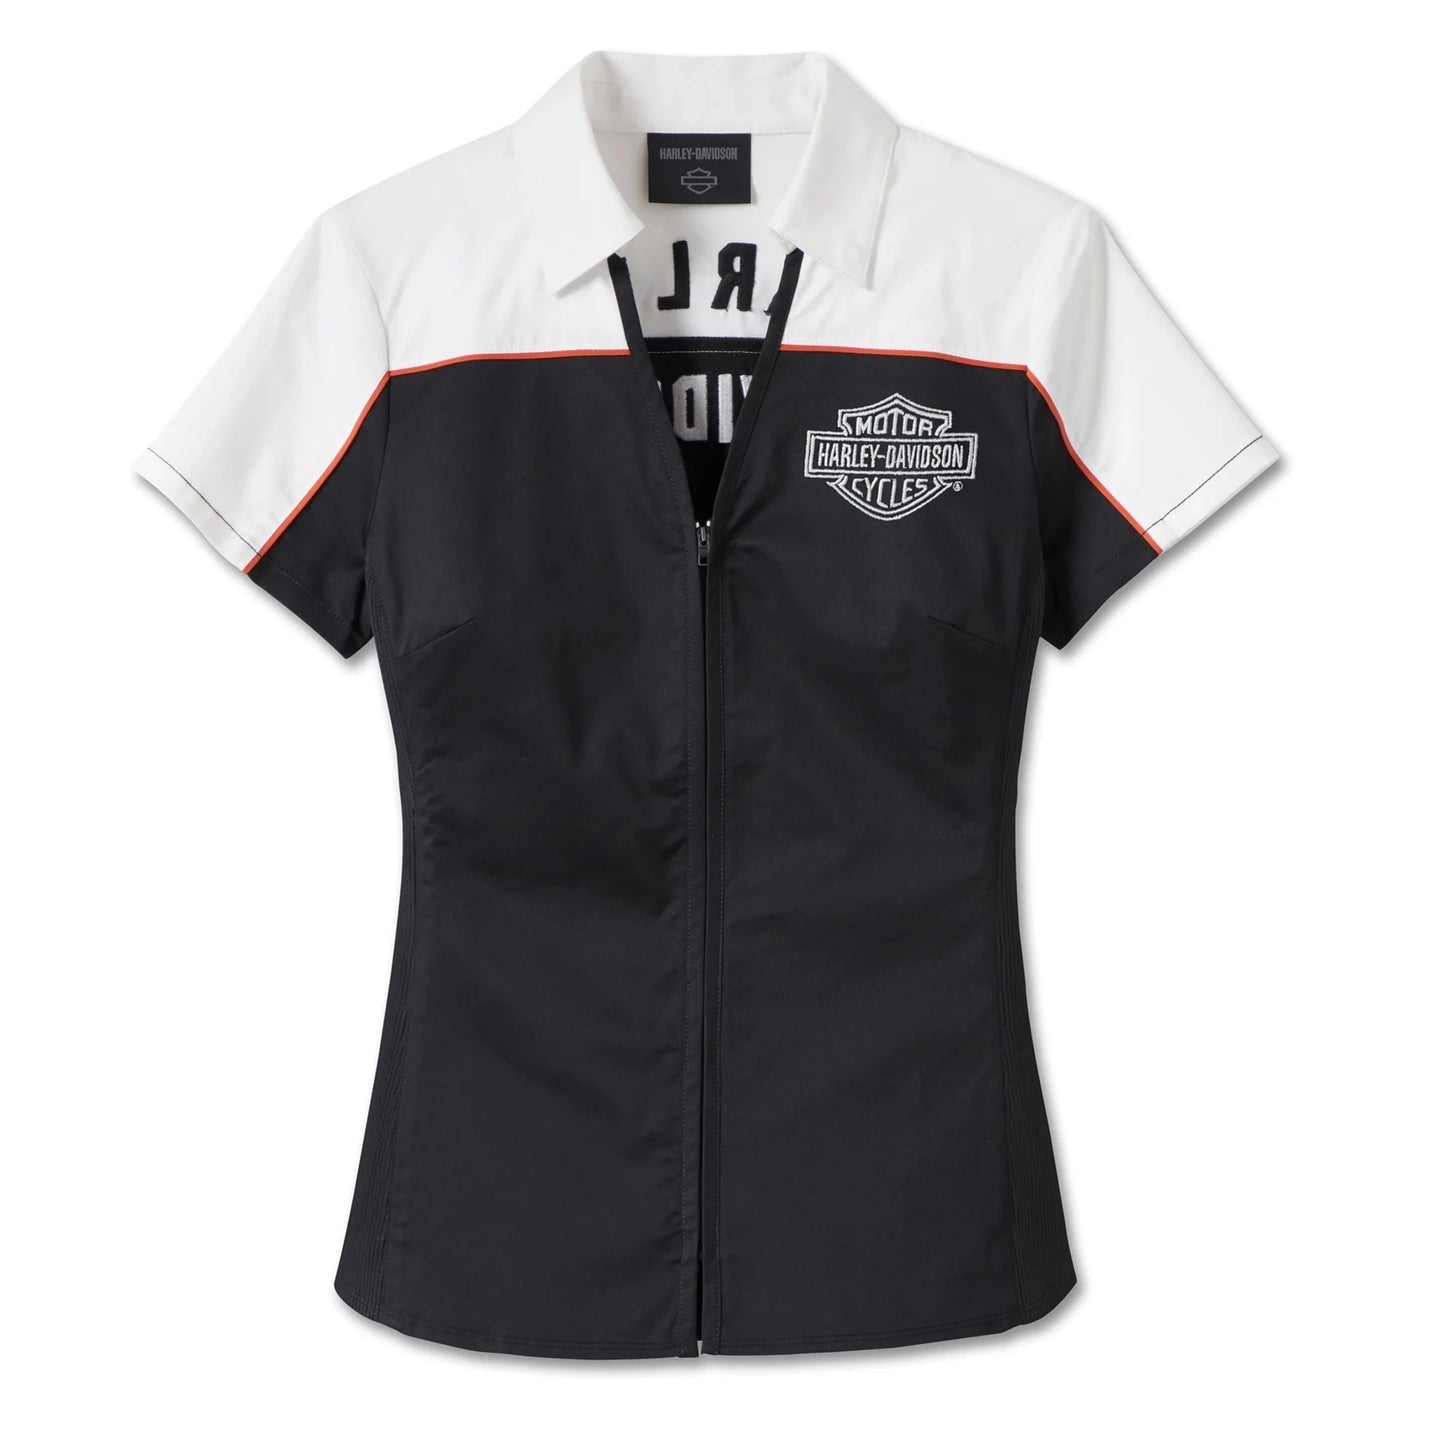 arley-Davidson Women's Elemental Zip Front Shirt, 99024-23VW